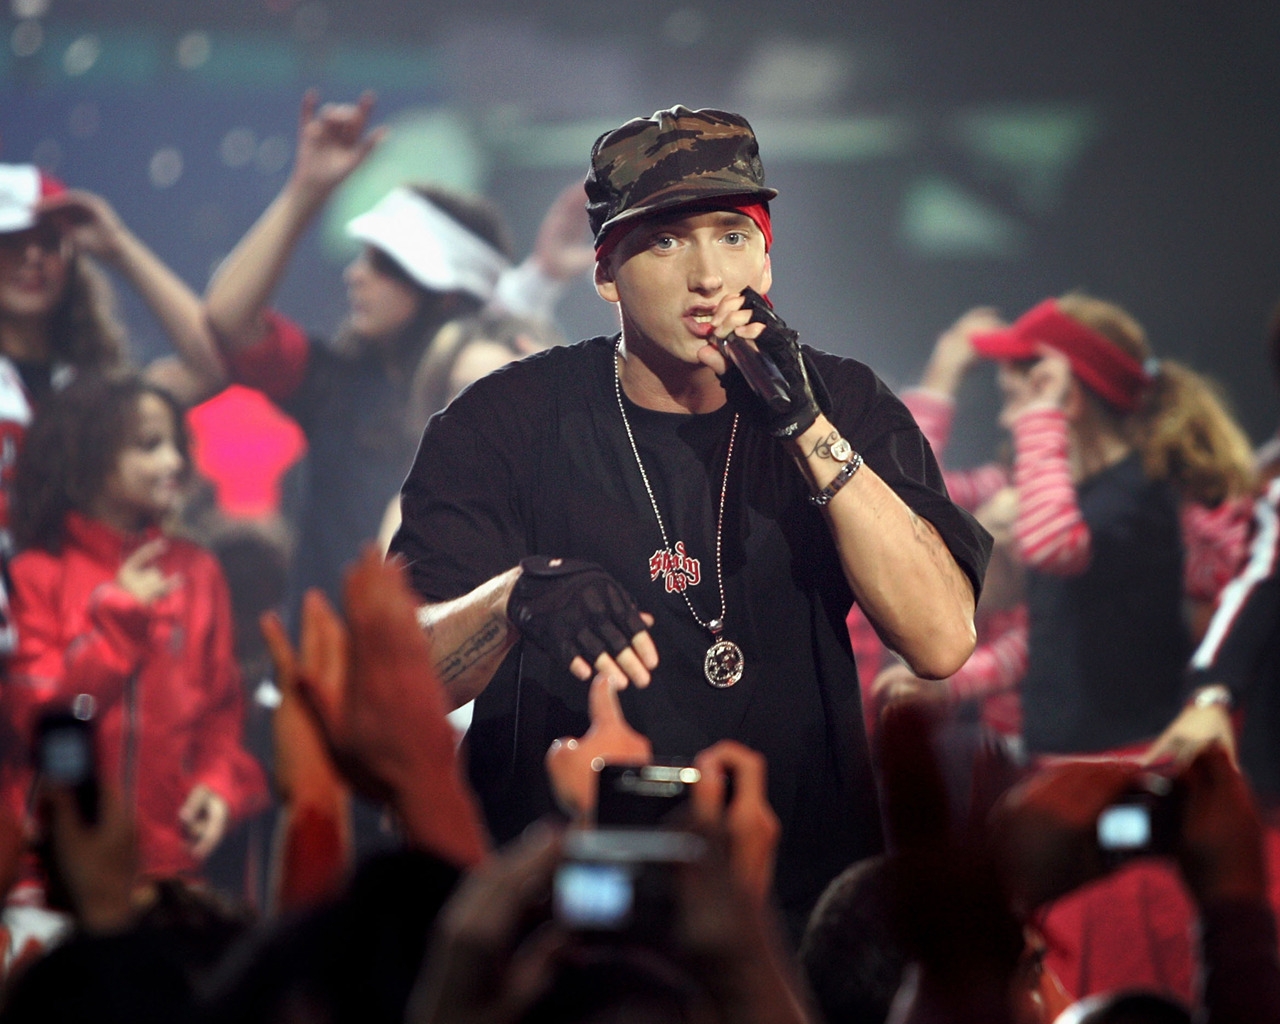 Eminem for 1280 x 1024 resolution